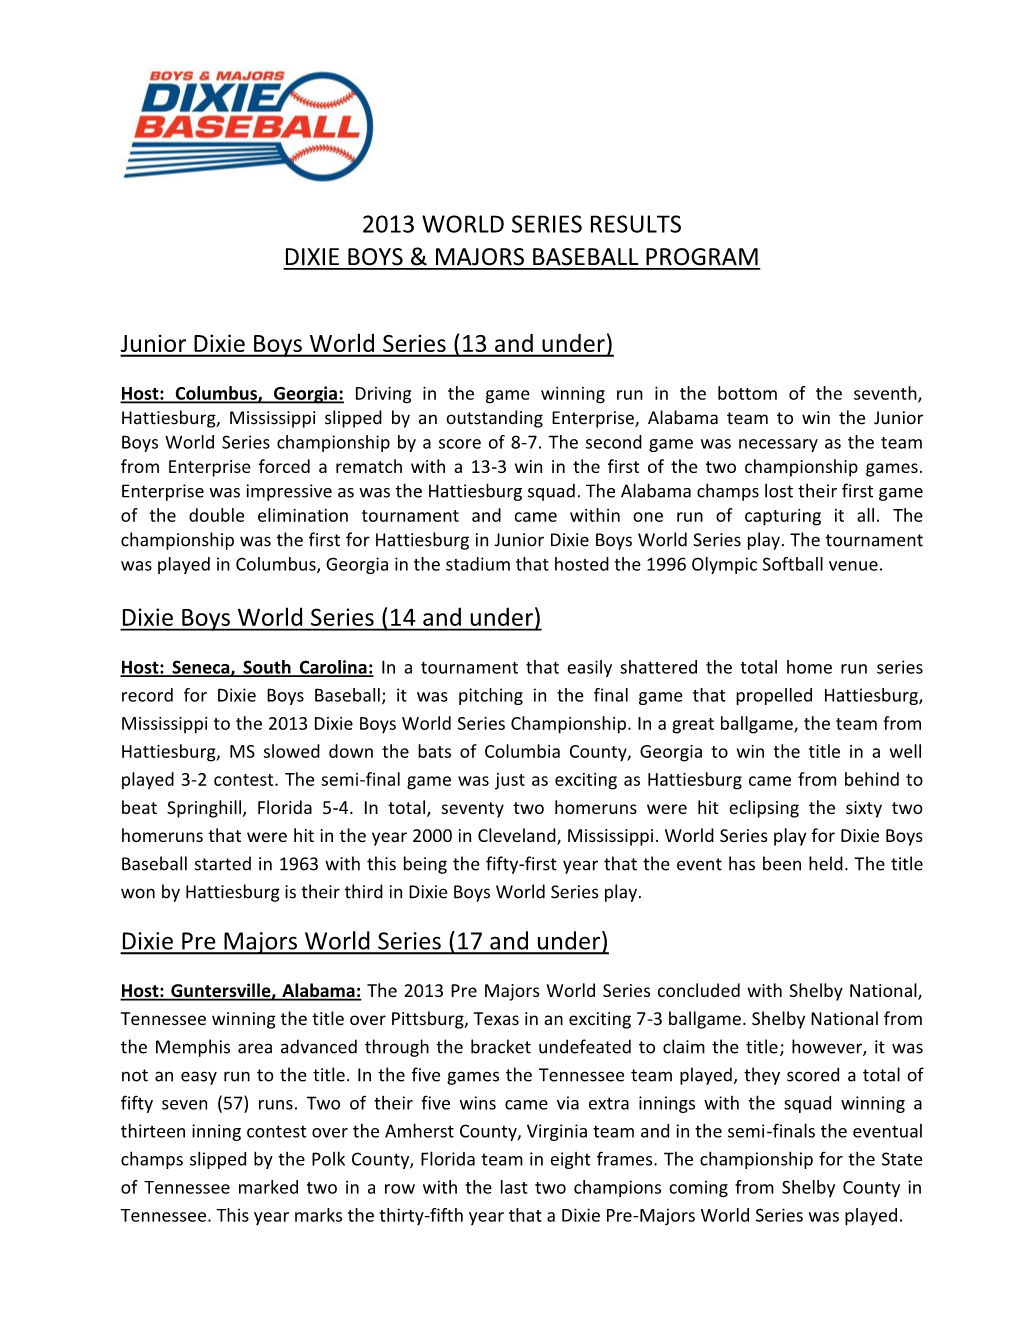 2013 World Series Results Dixie Boys & Majors